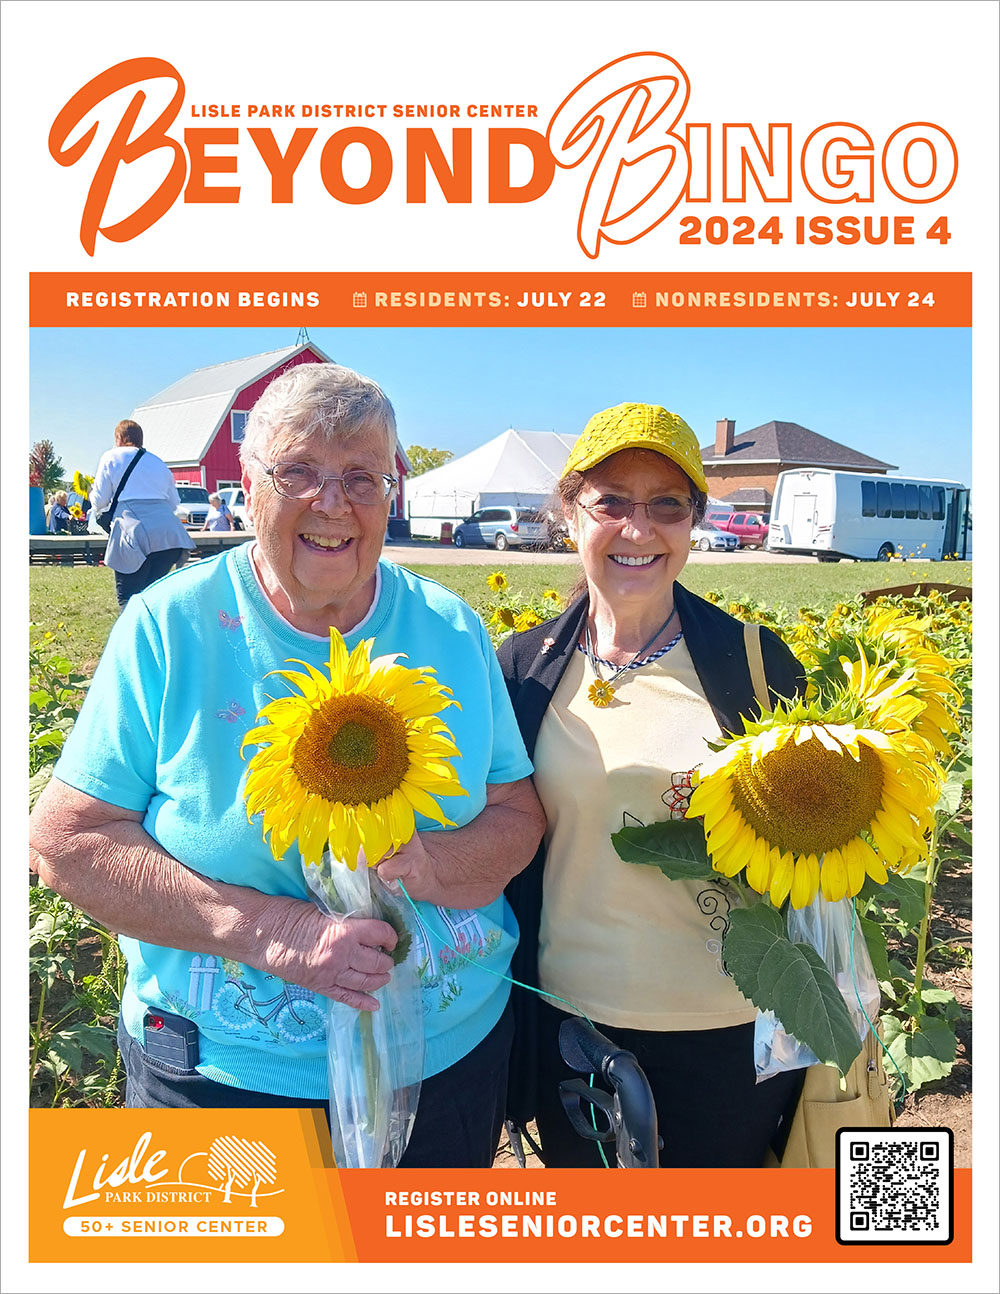 2024 Issue 4 - 50+ Beyond Bingo Program Guide Cover